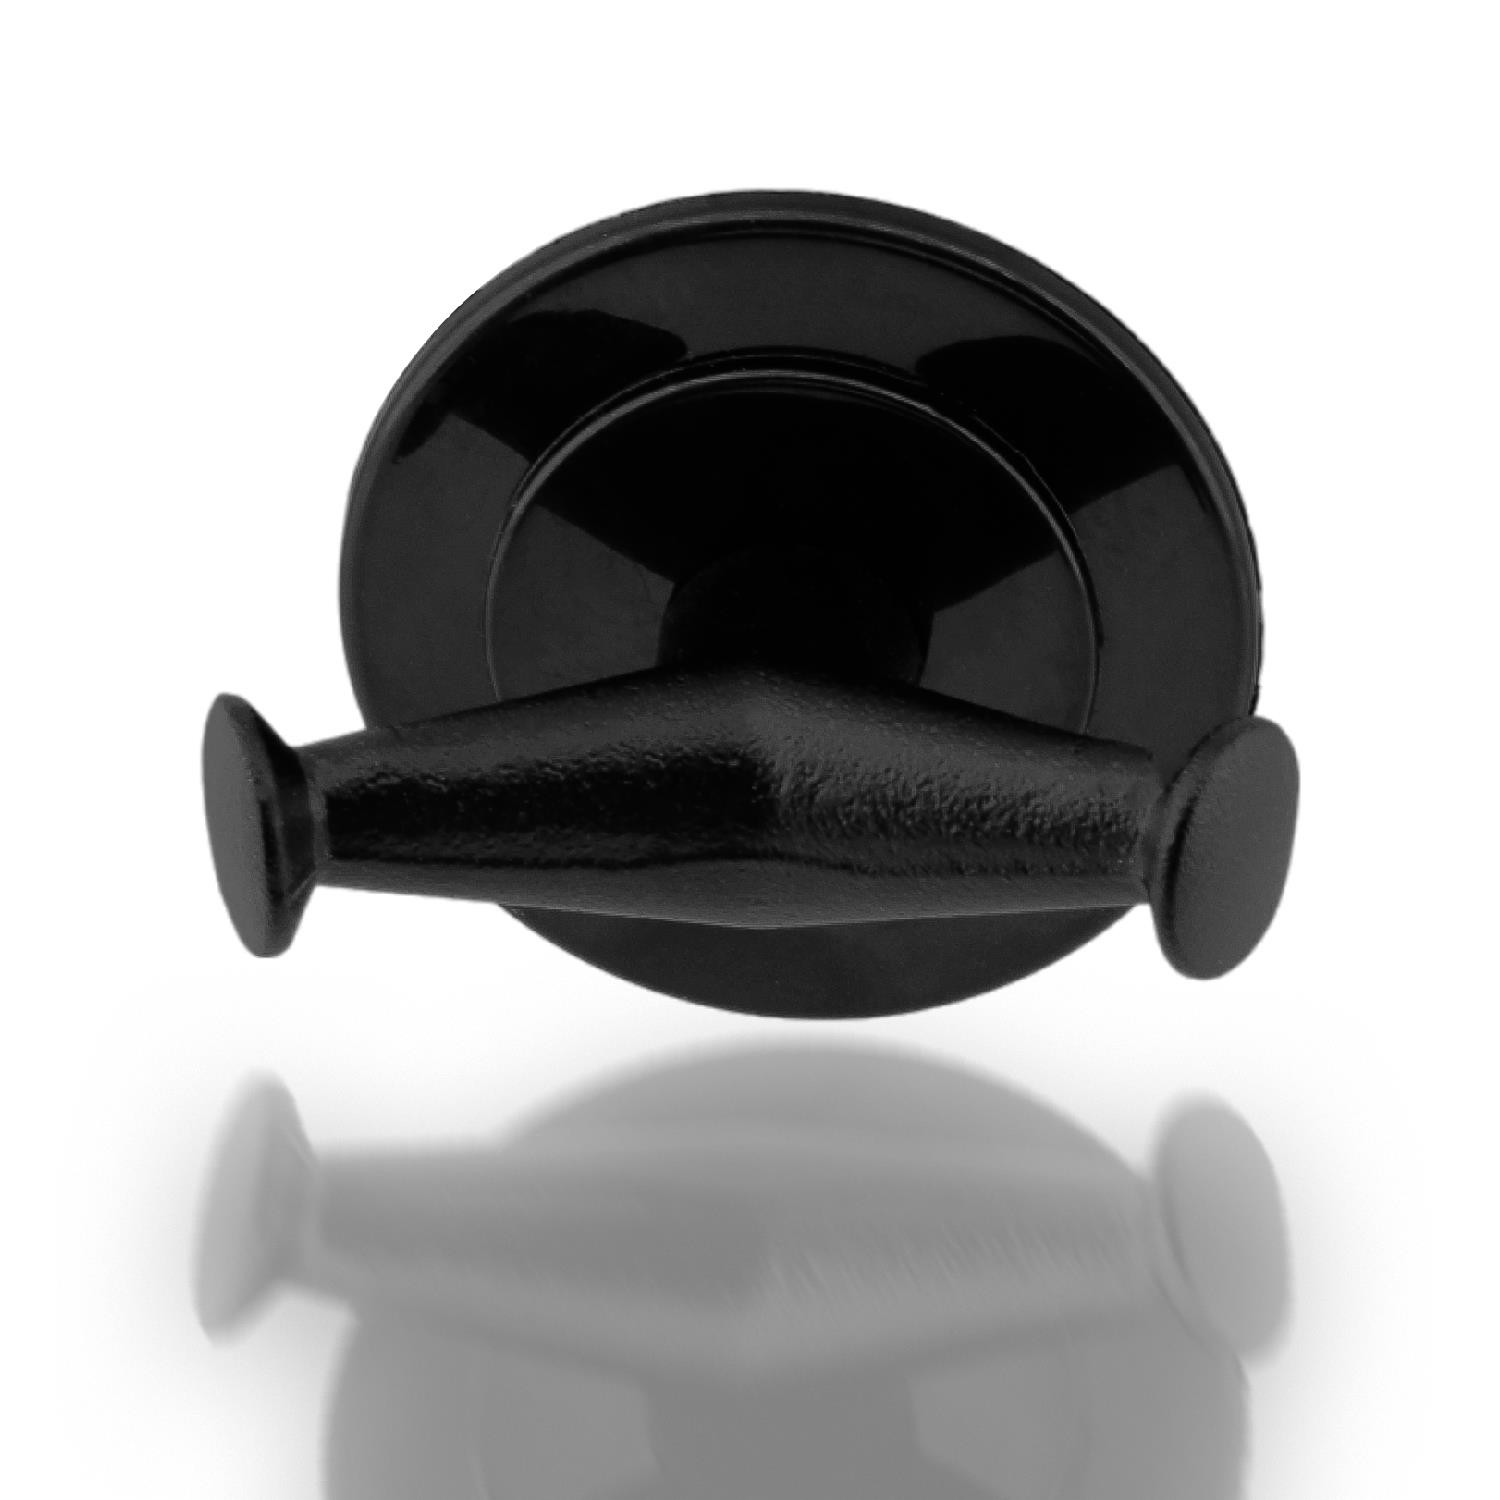 Yapışkanlı Banyo Lavabo Çatal 2'li Askılık Siyah Renk Metal Sağlam Aparat Bornoz Havlu Asma Askı 